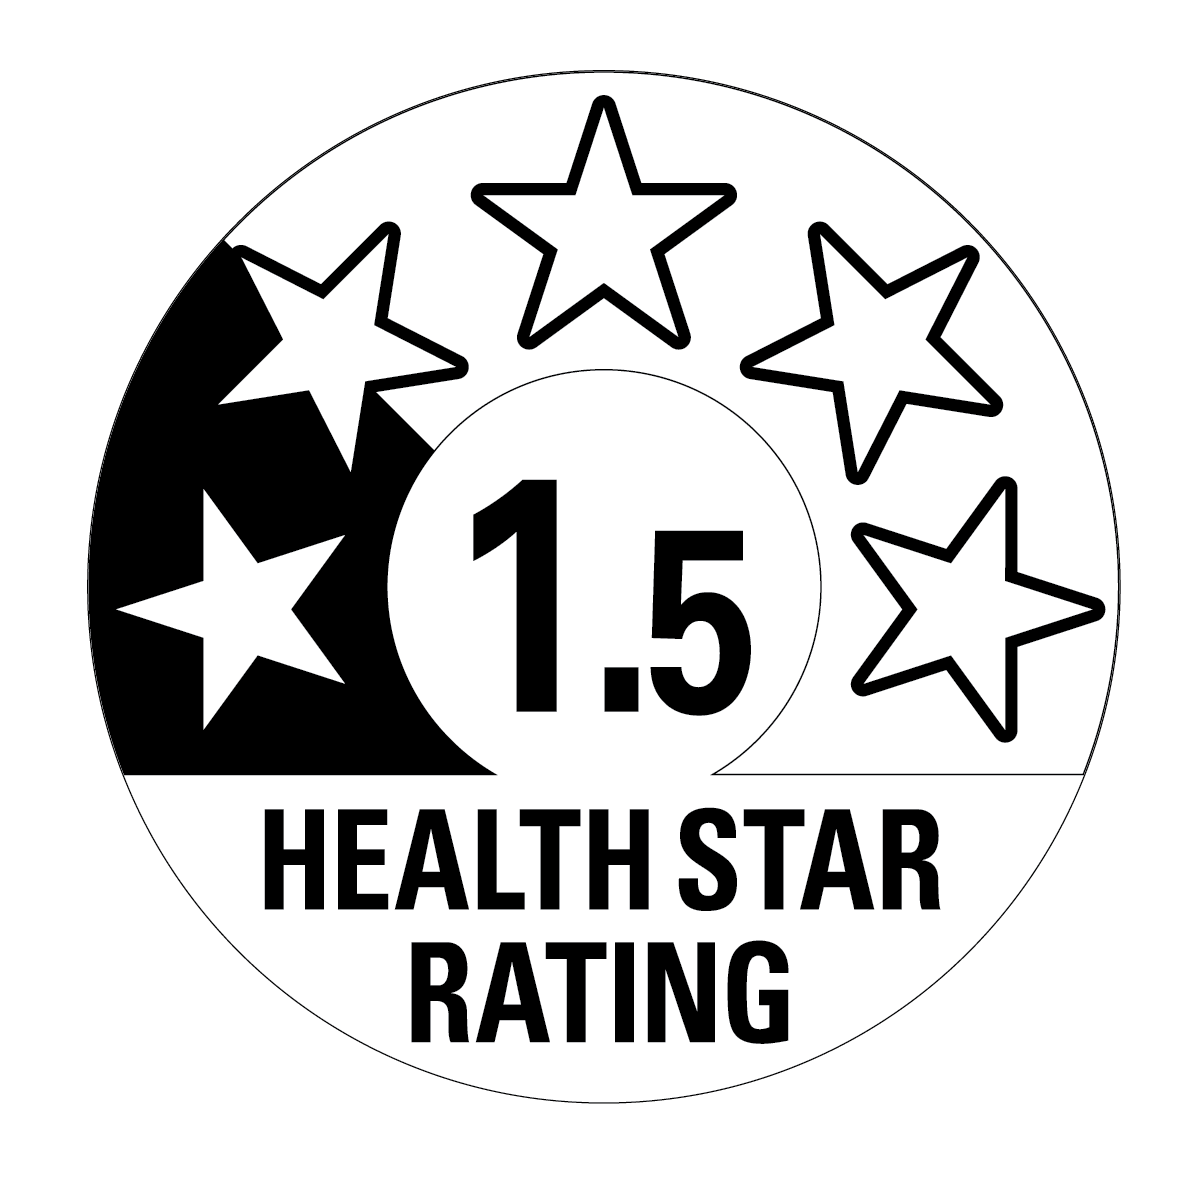 Health Star Rating displaying a 1.5 rating